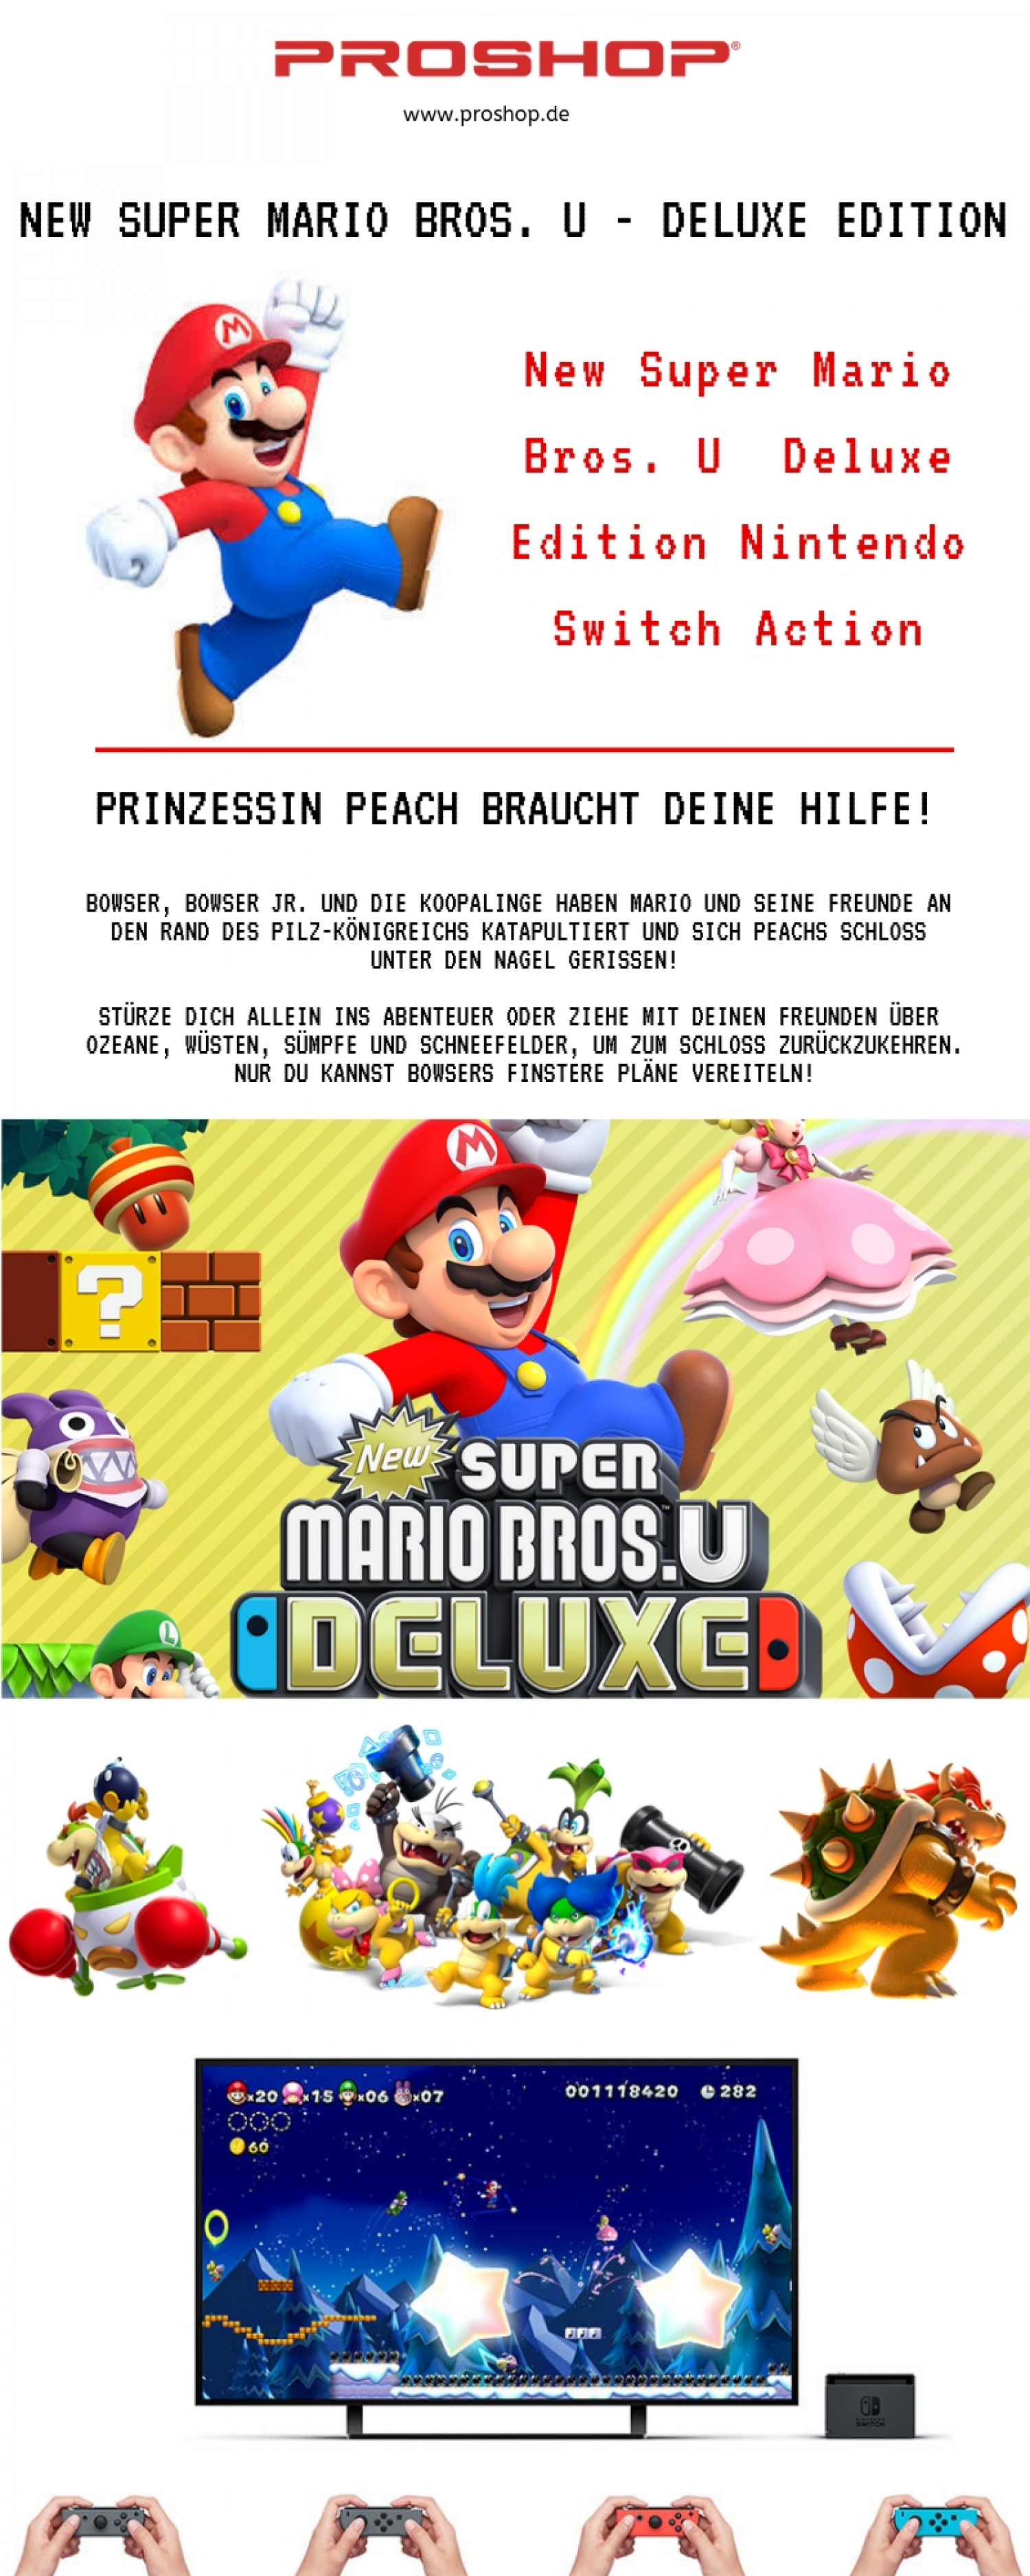 New Super Mario Bros. U - Deluxe Edition - Nintendo Switch - Action - PEGI 3 Infographic